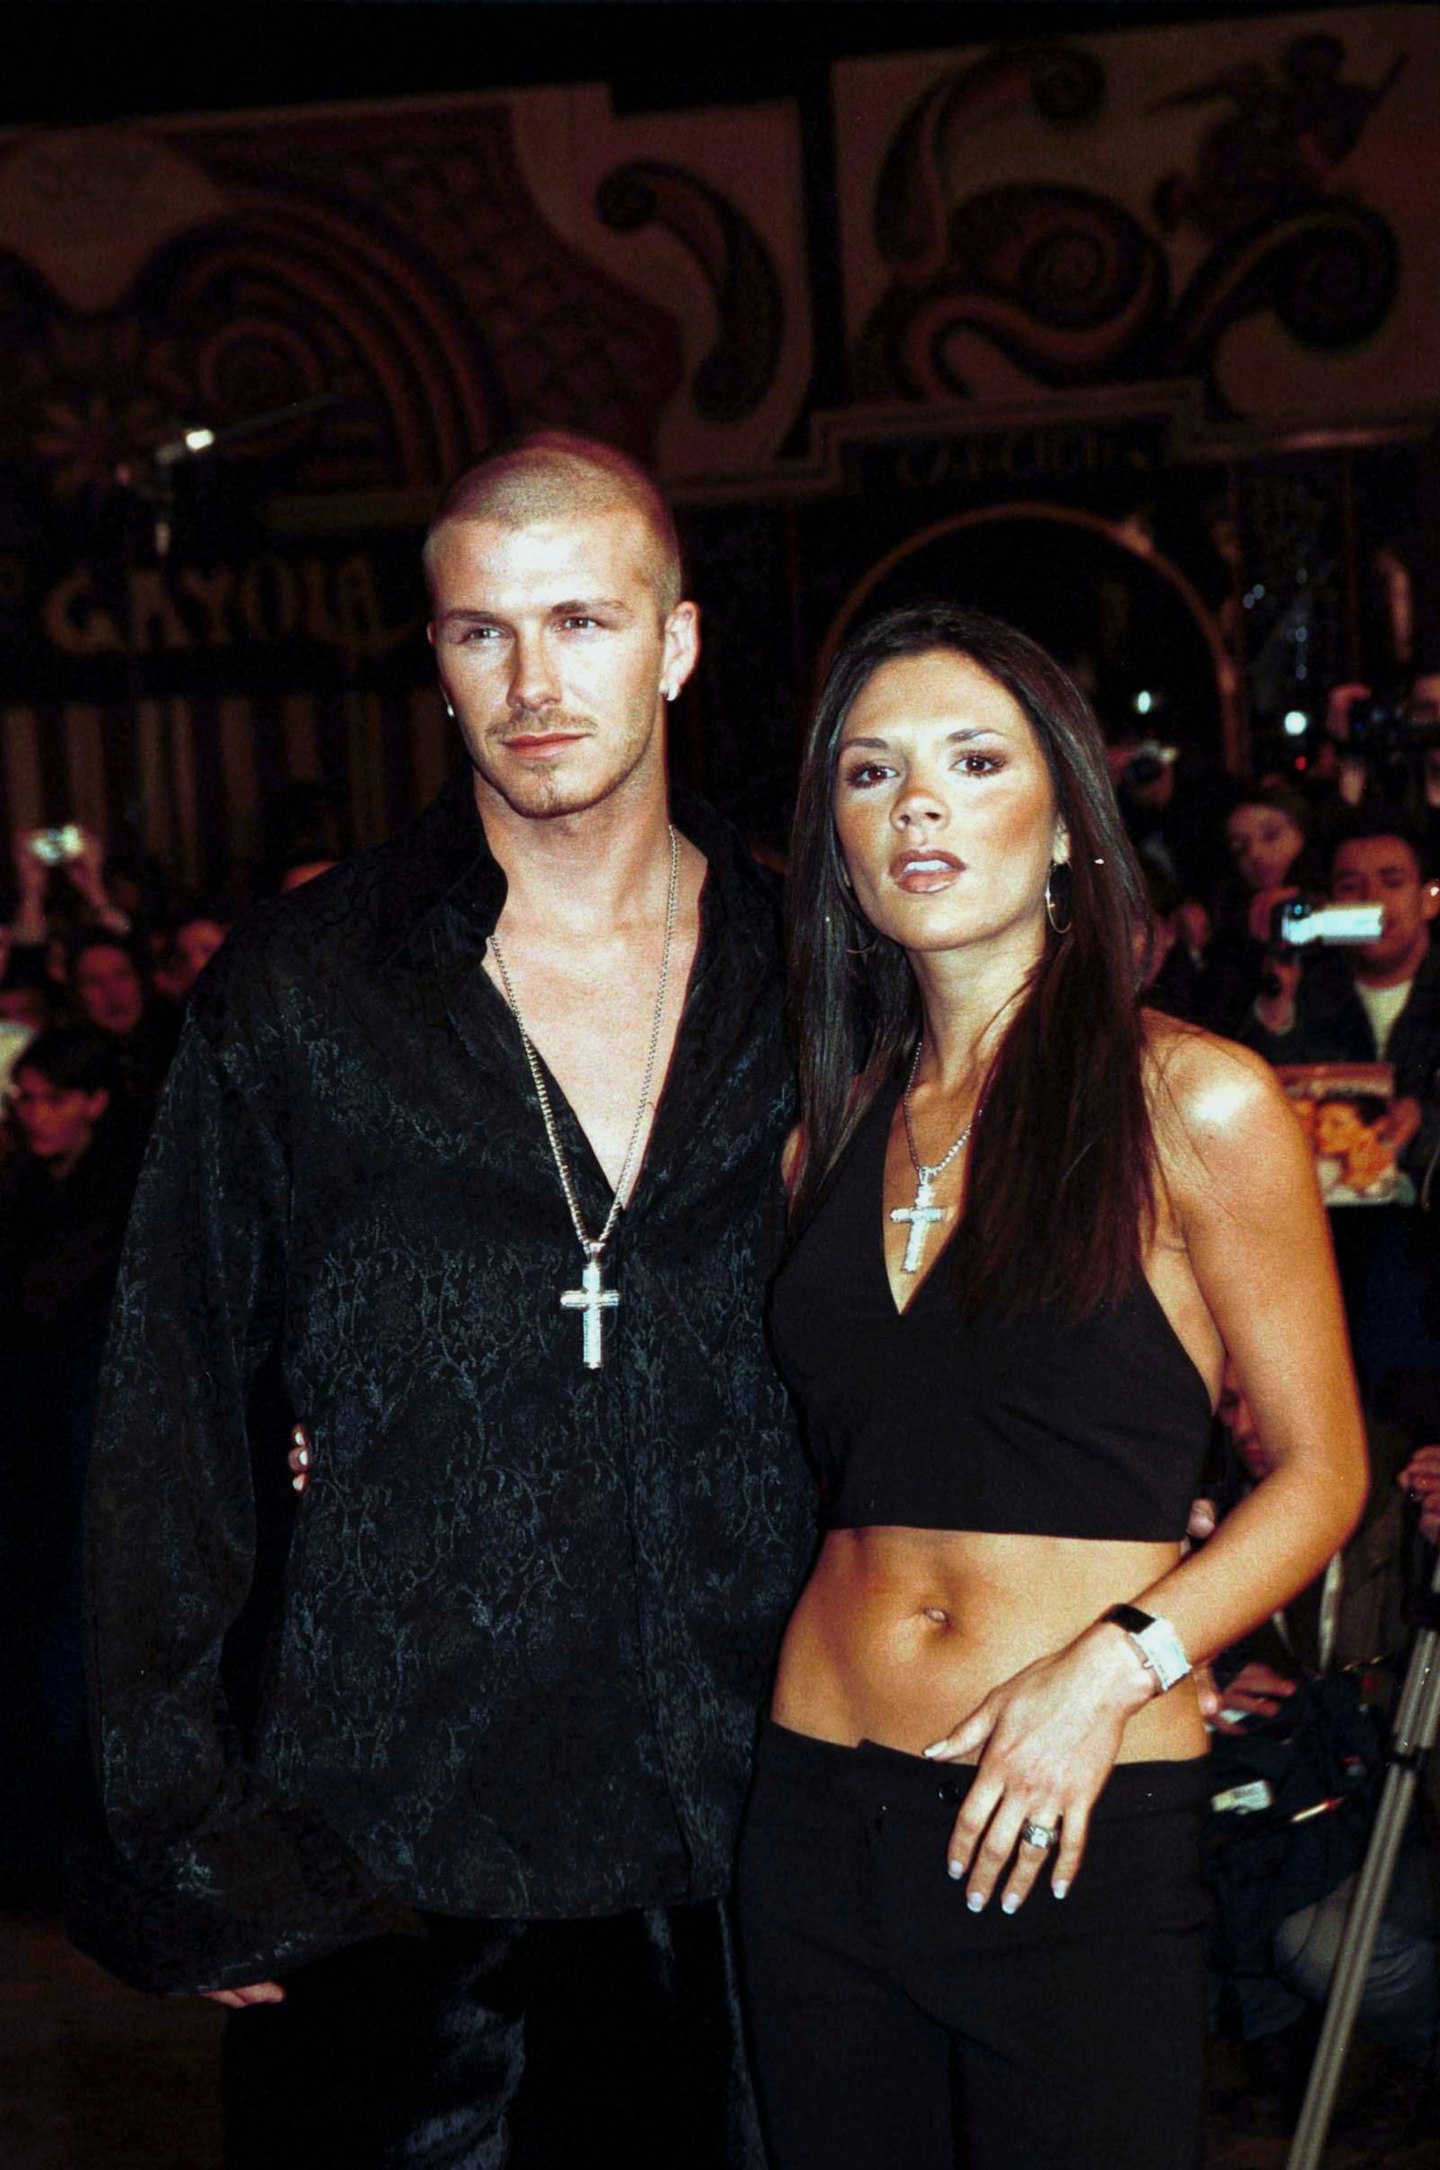 David and Victoria Beckham